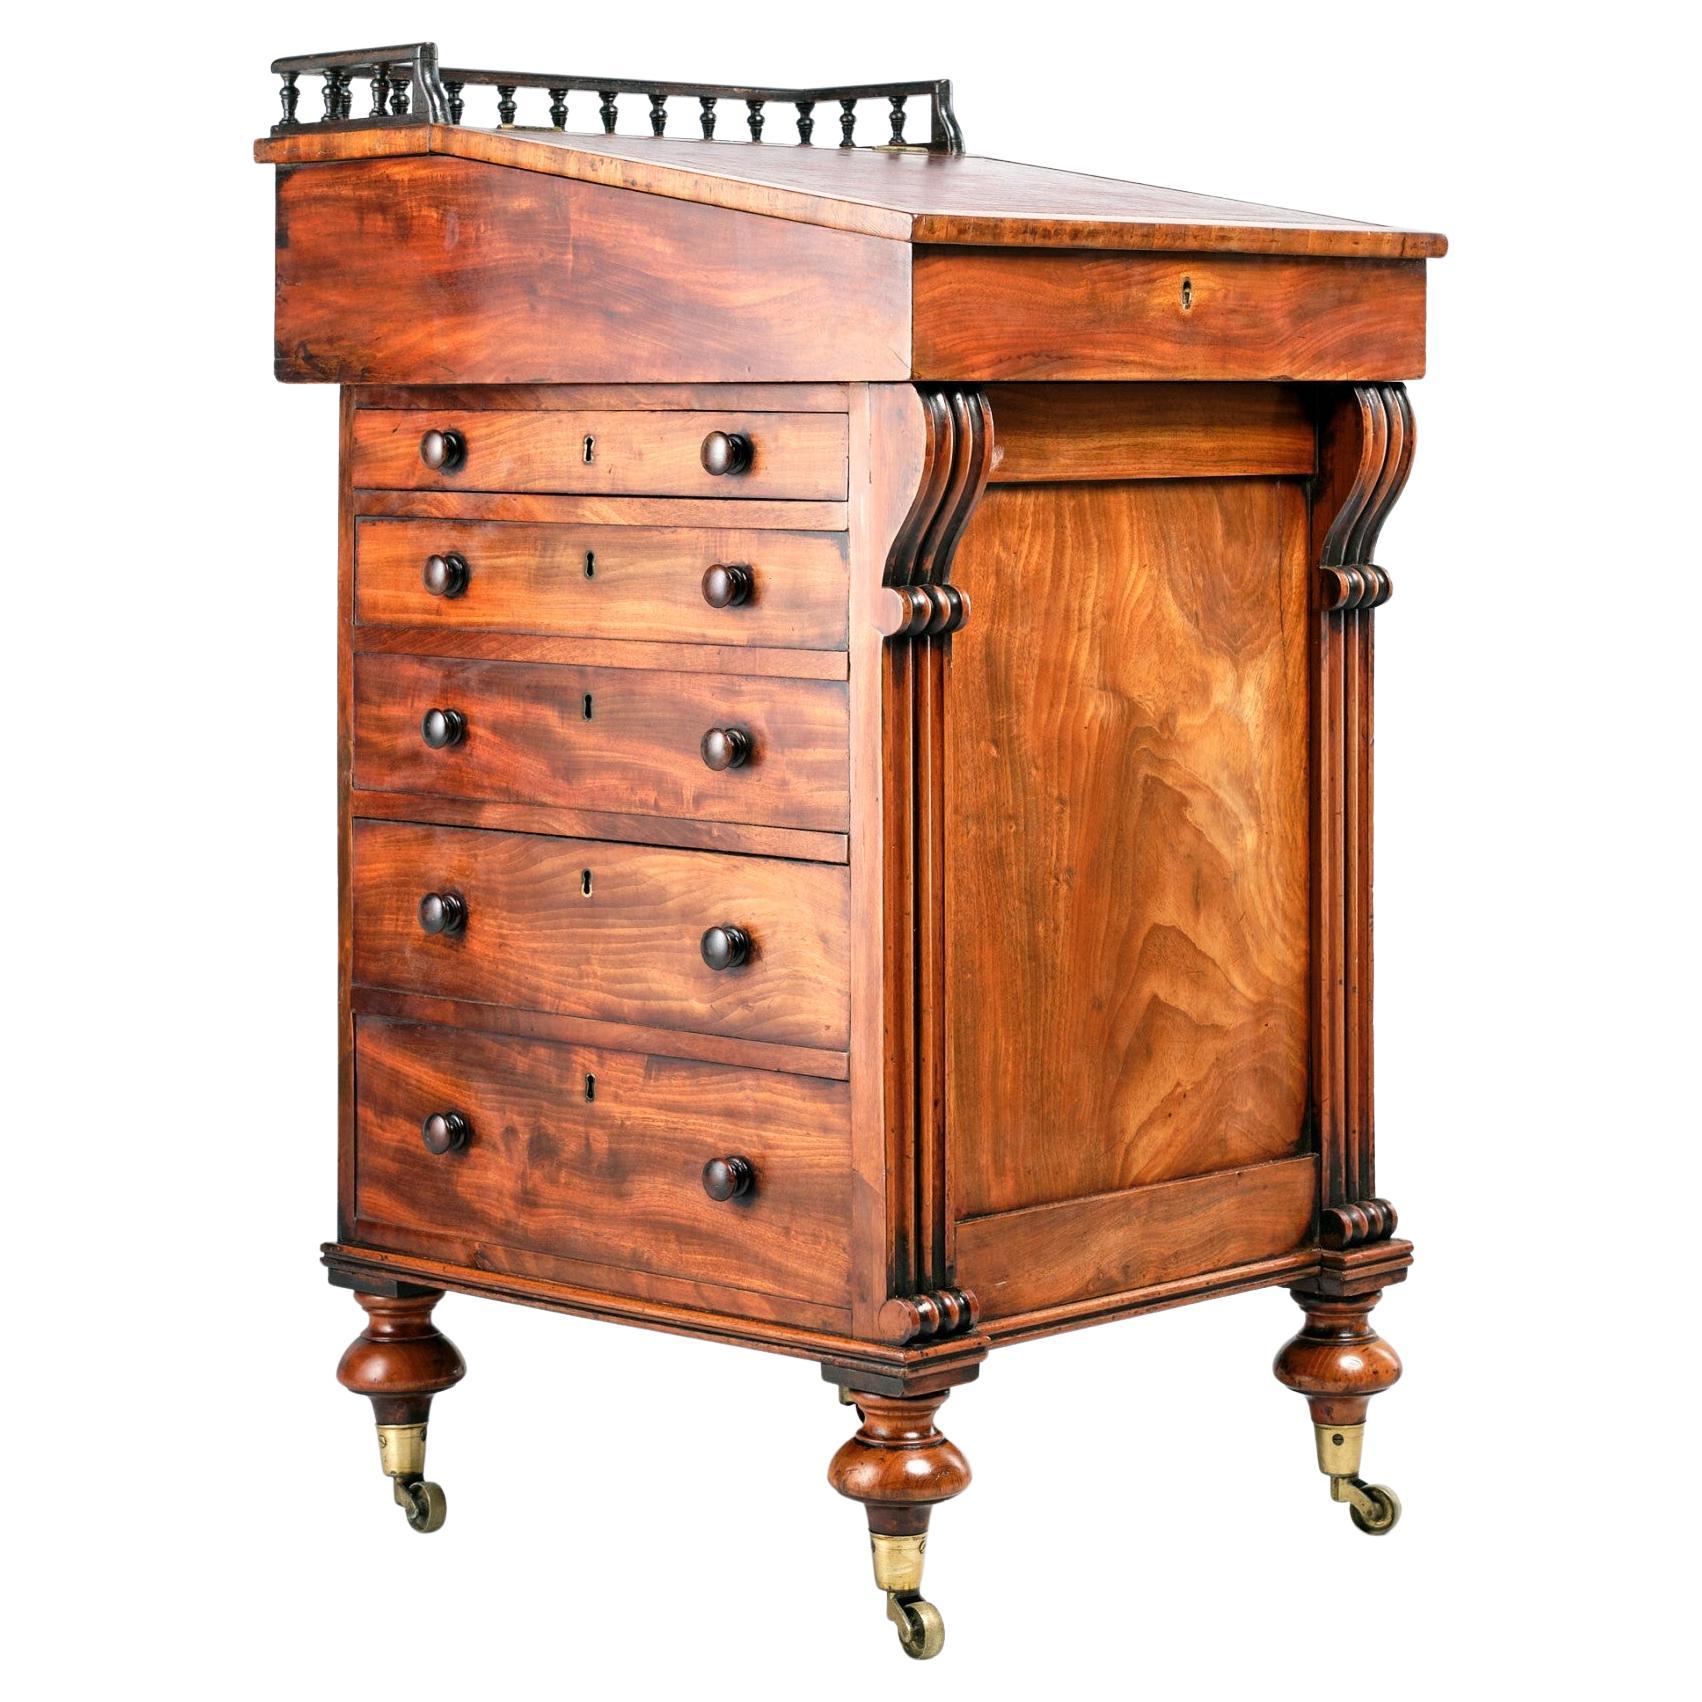 A Superior English Regency Period Davenport Desk in Figured Mahogany, Circa 1830 For Sale